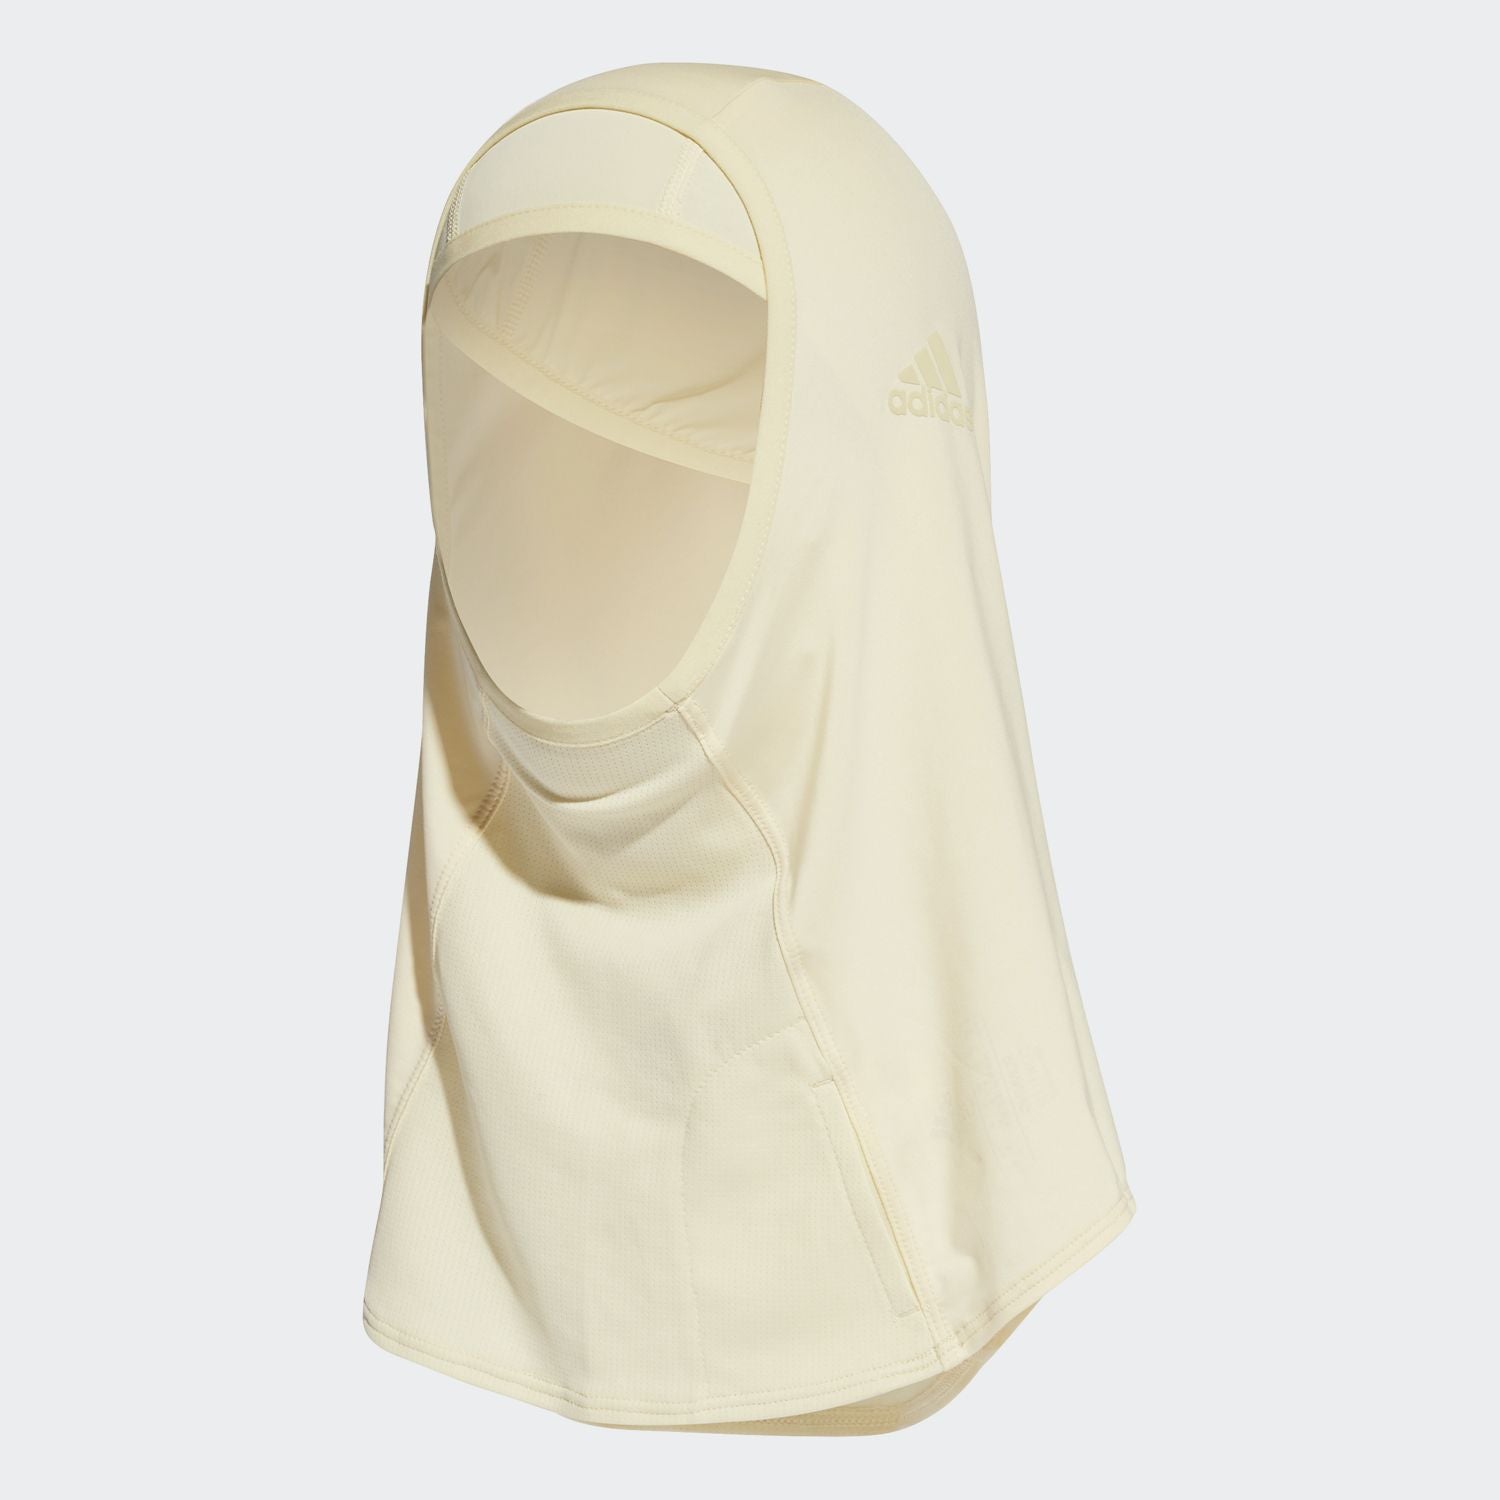 Adidas Hijab - Women